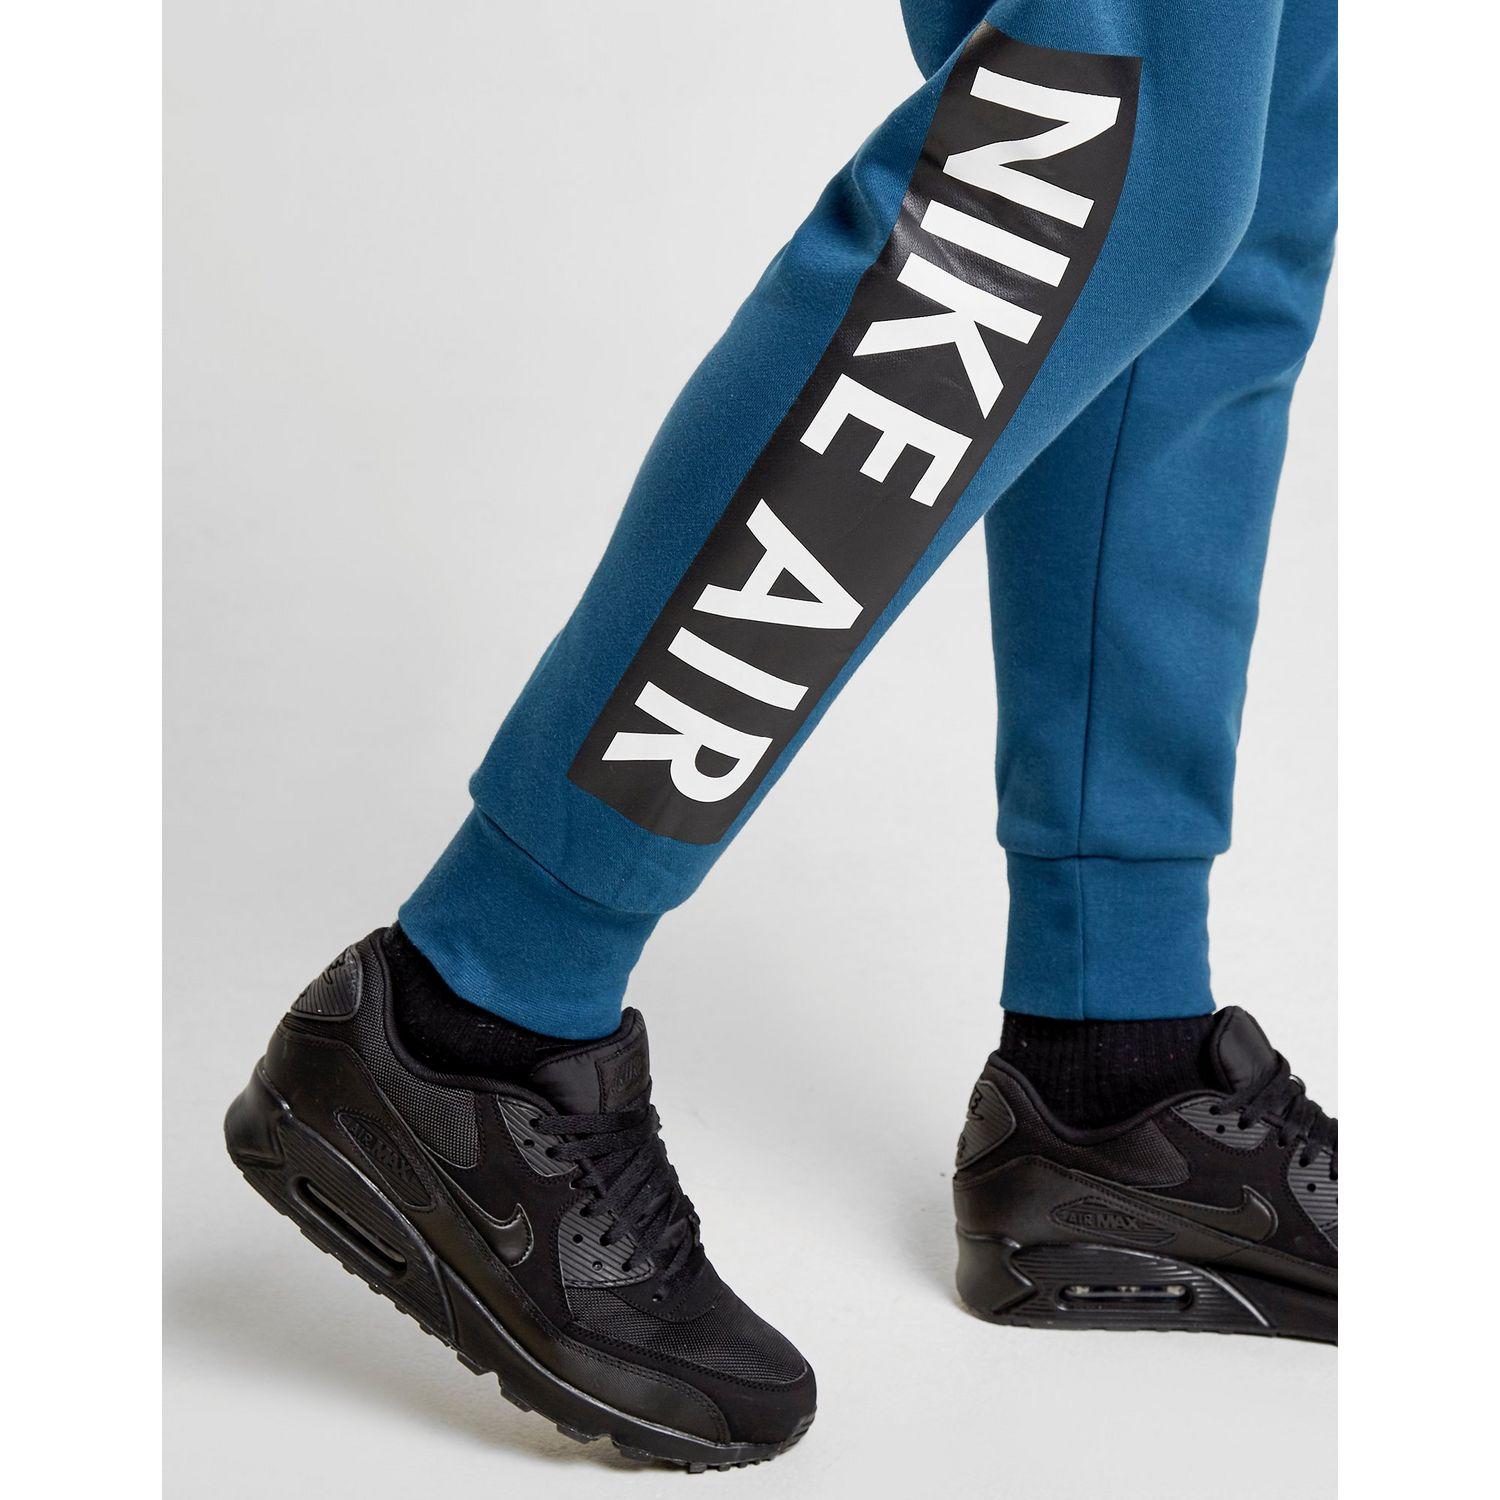 Nike Cotton Air Leg Logo Track Pants in 